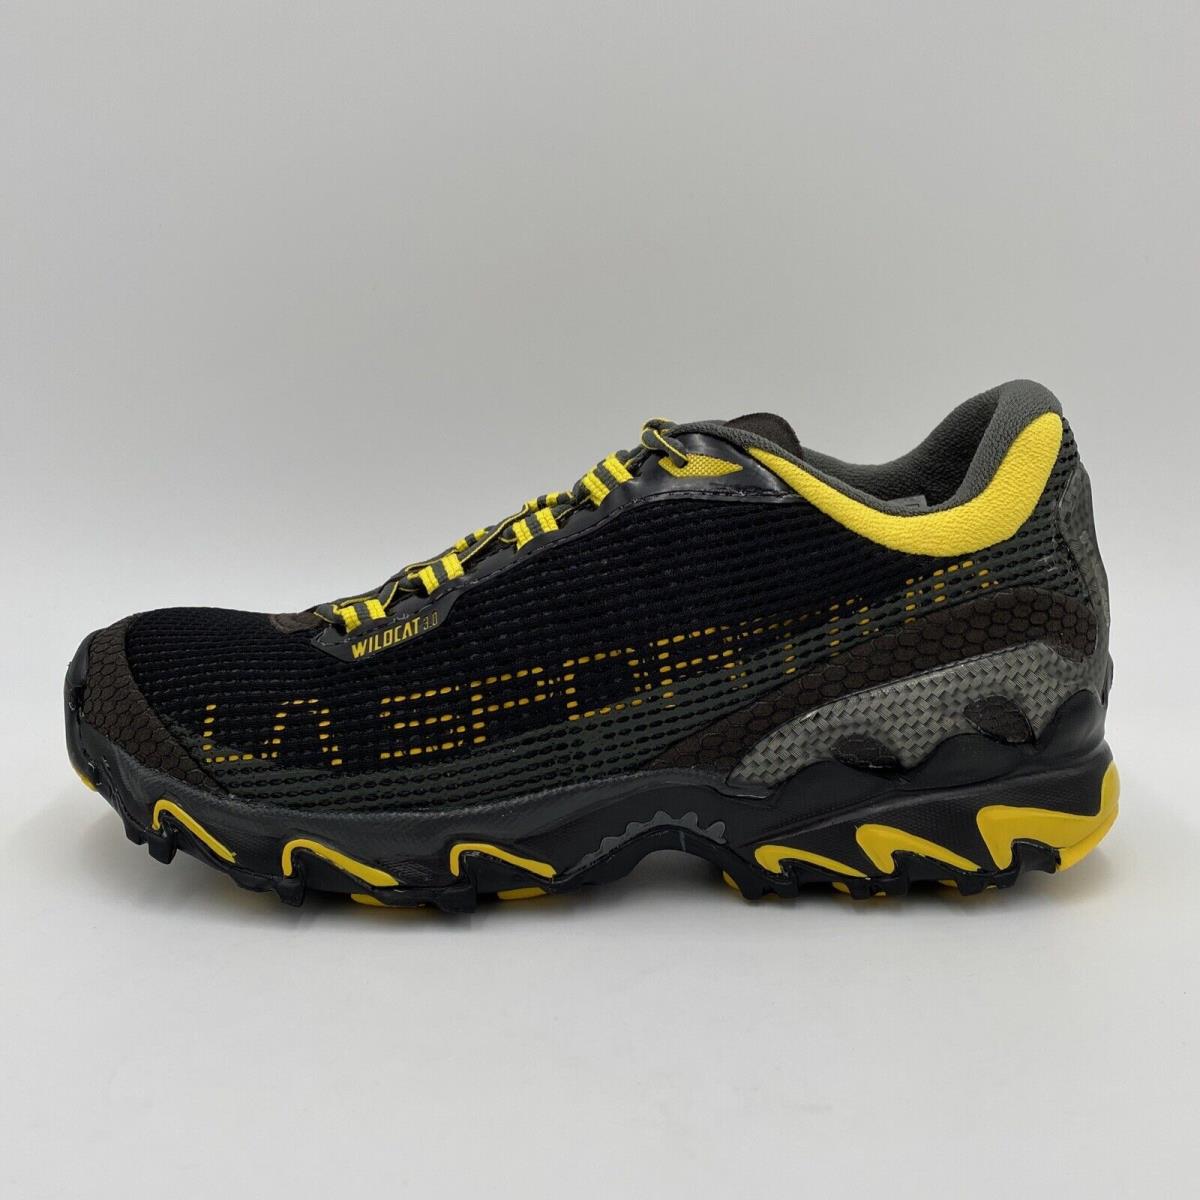 Lasportiva La Sportiva Mens Wildcat 3.0 Mountain Running Shoes 260BY Black/yellow Size 12